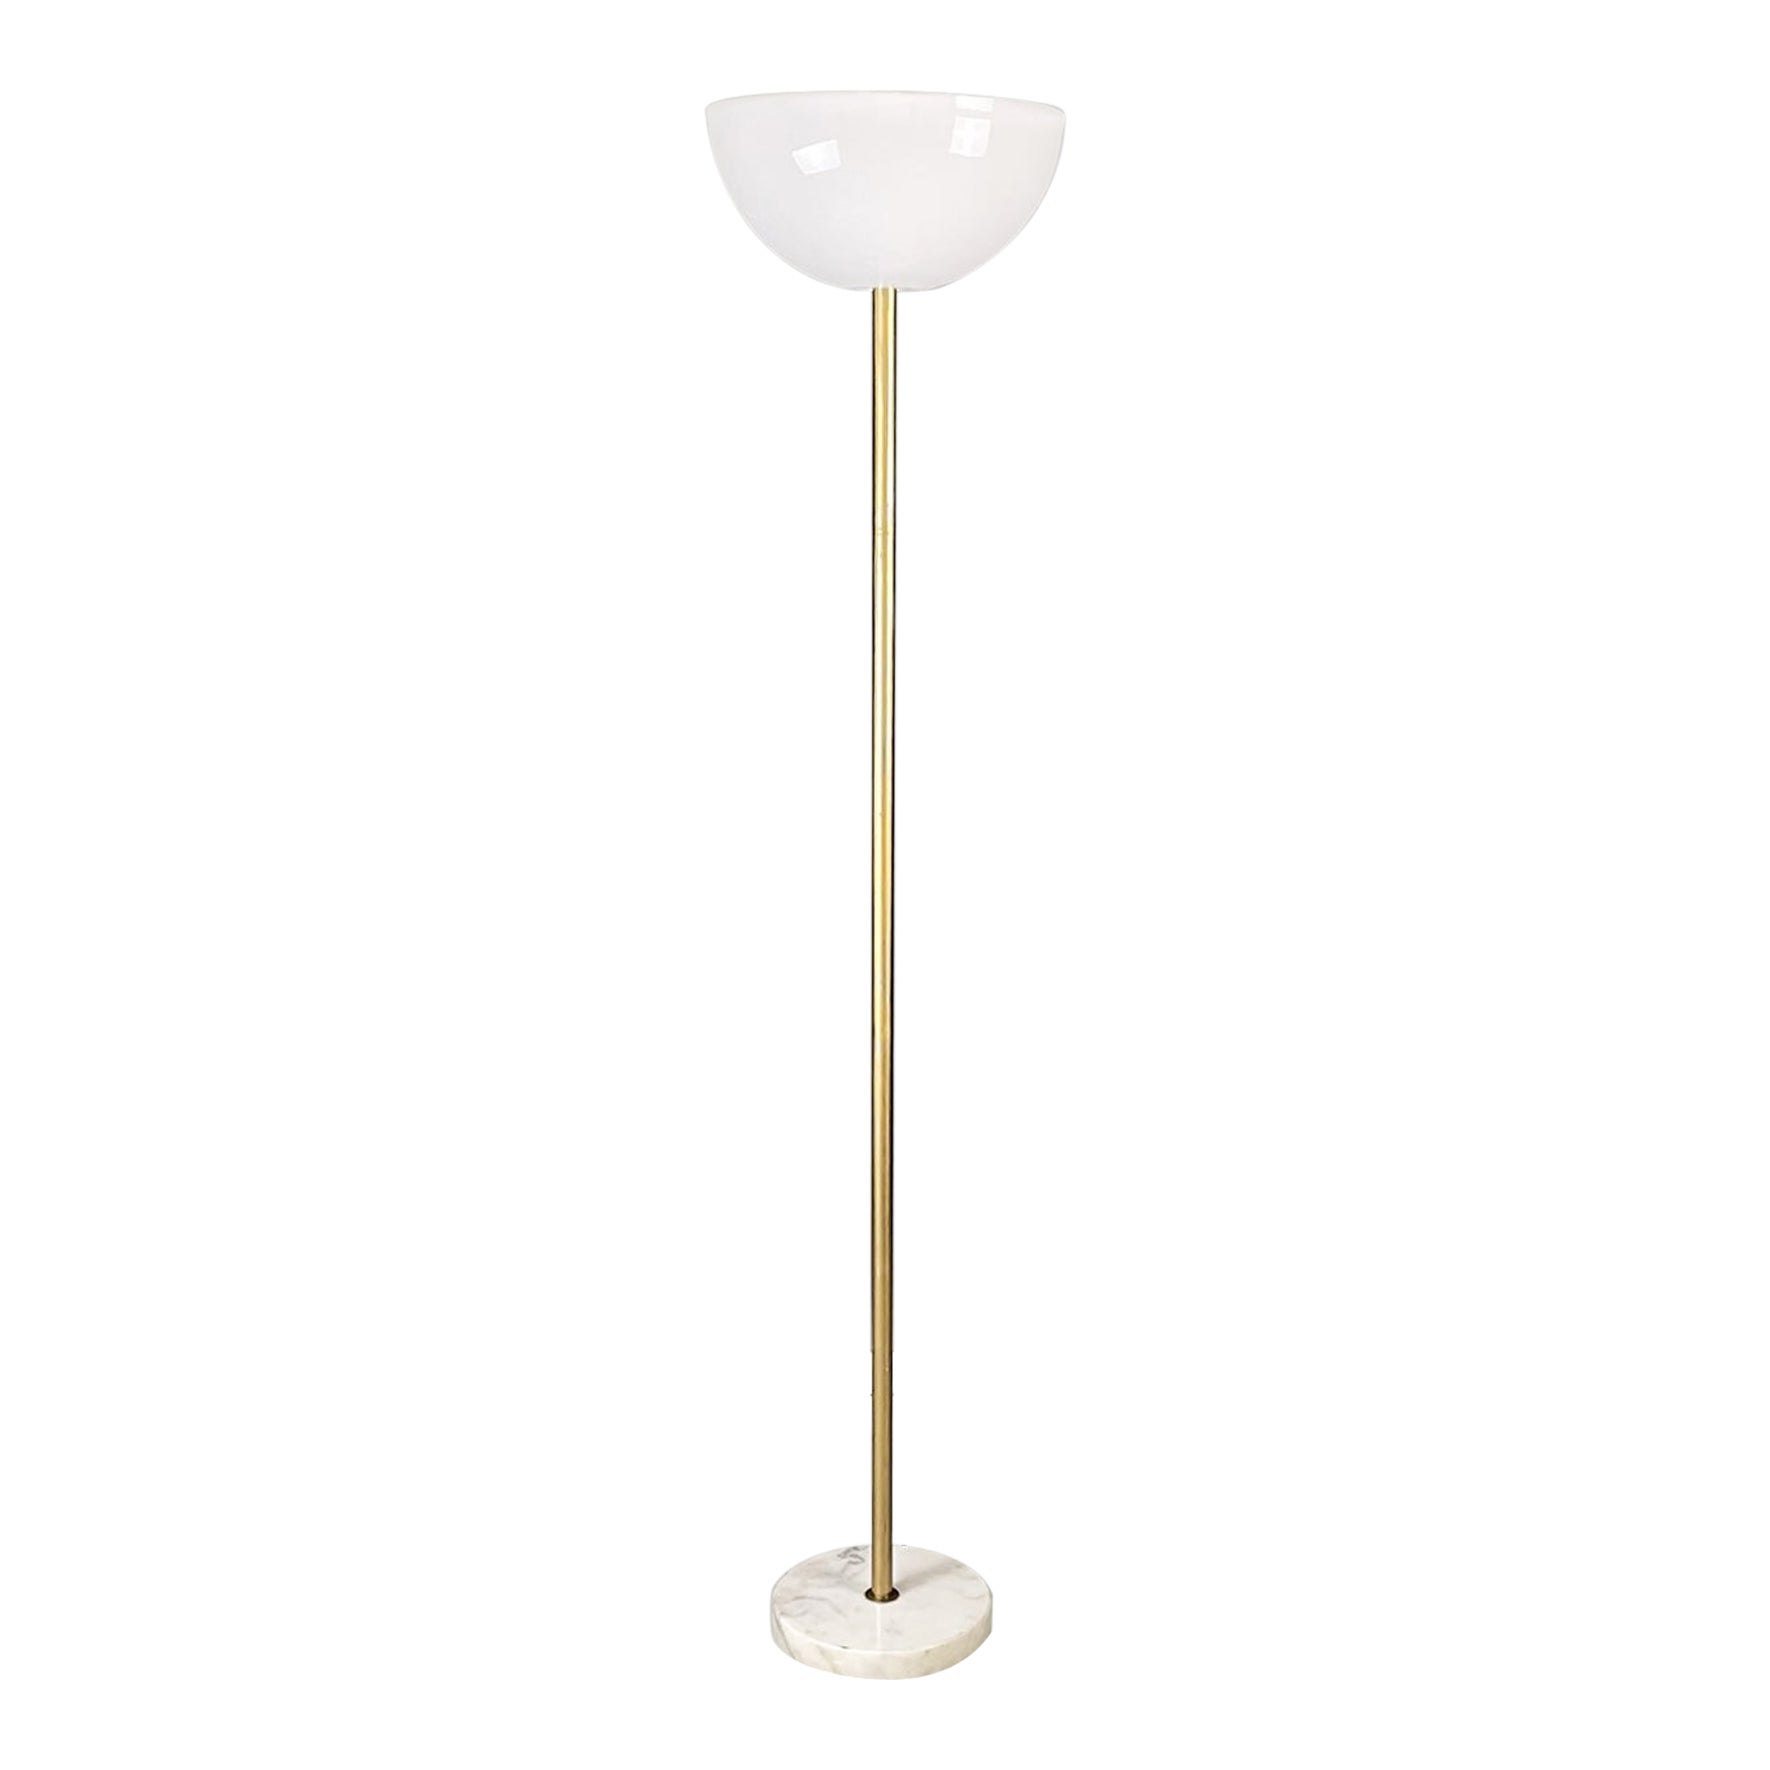 Italian Modern Floor lamp in opaline plexiglass, marble and golden metal, 1970s For Sale